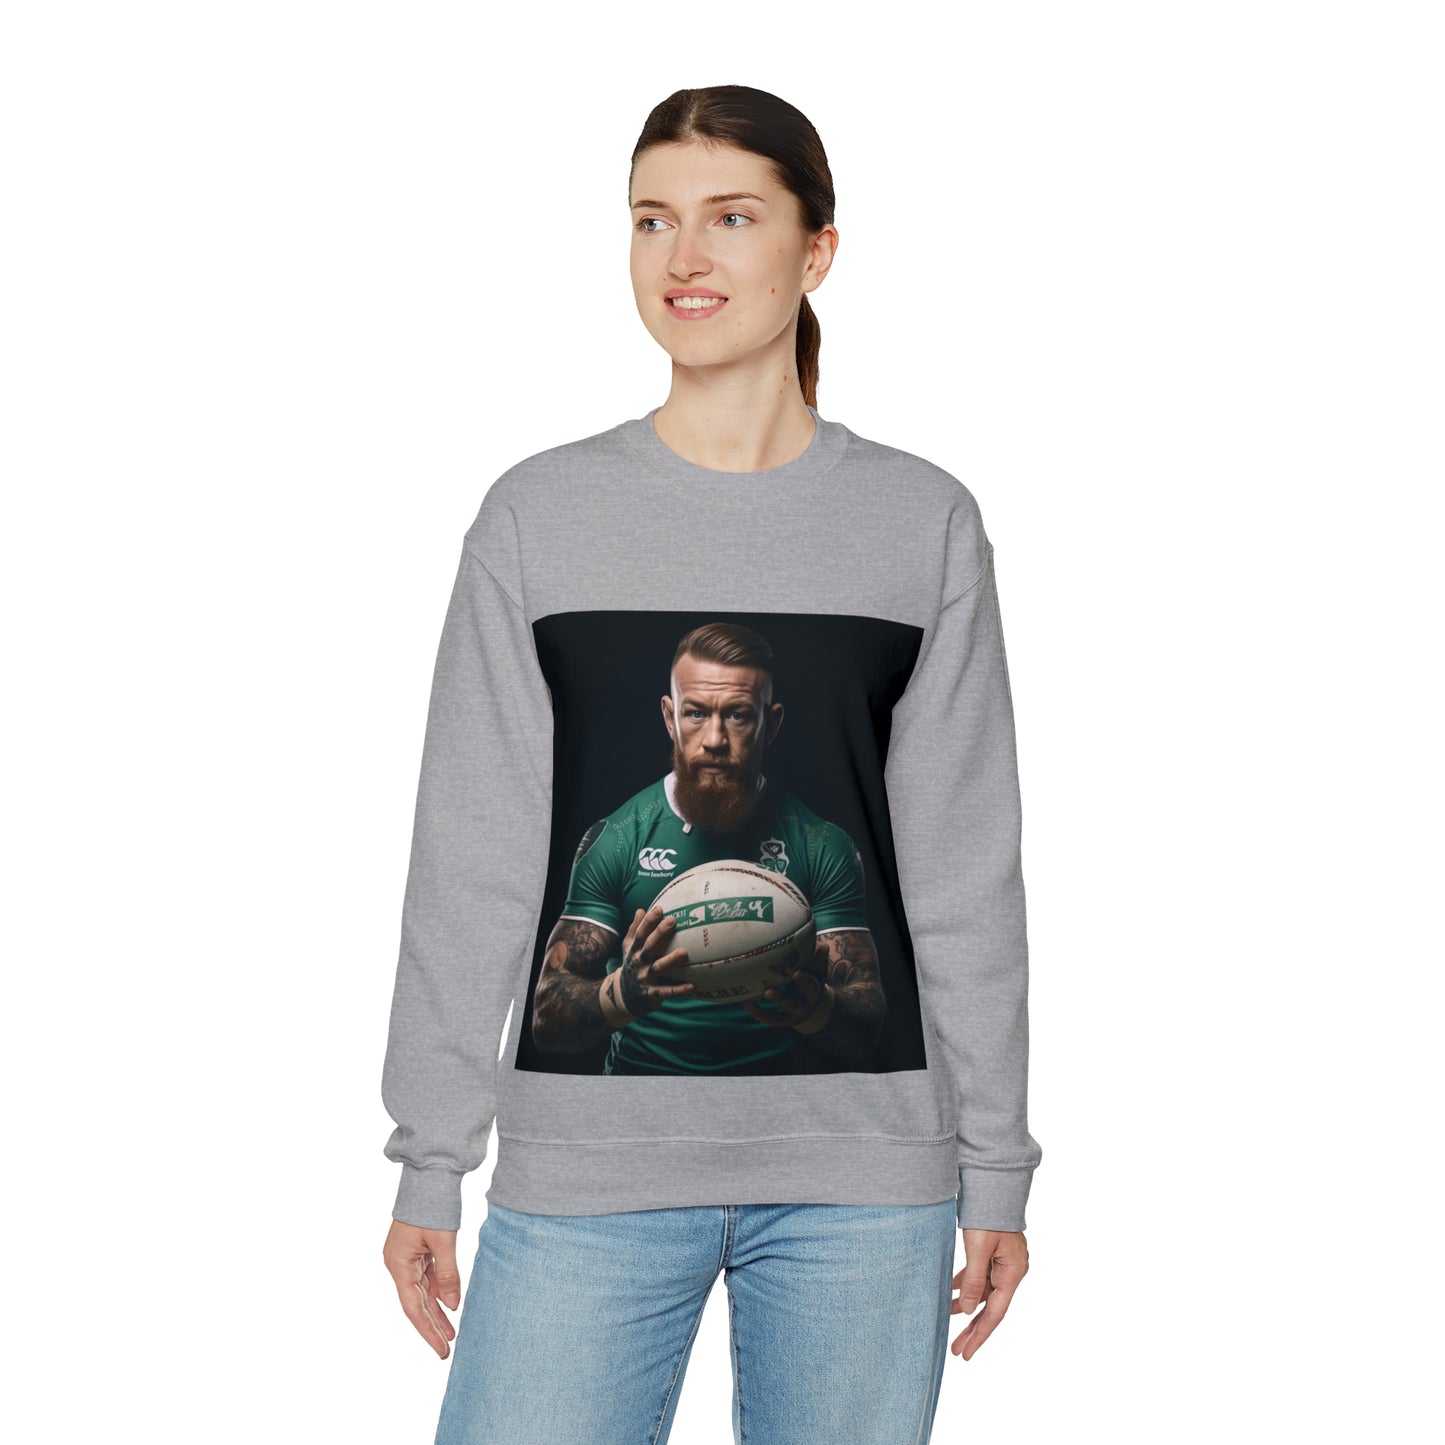 Serious Conor - light sweatshirts